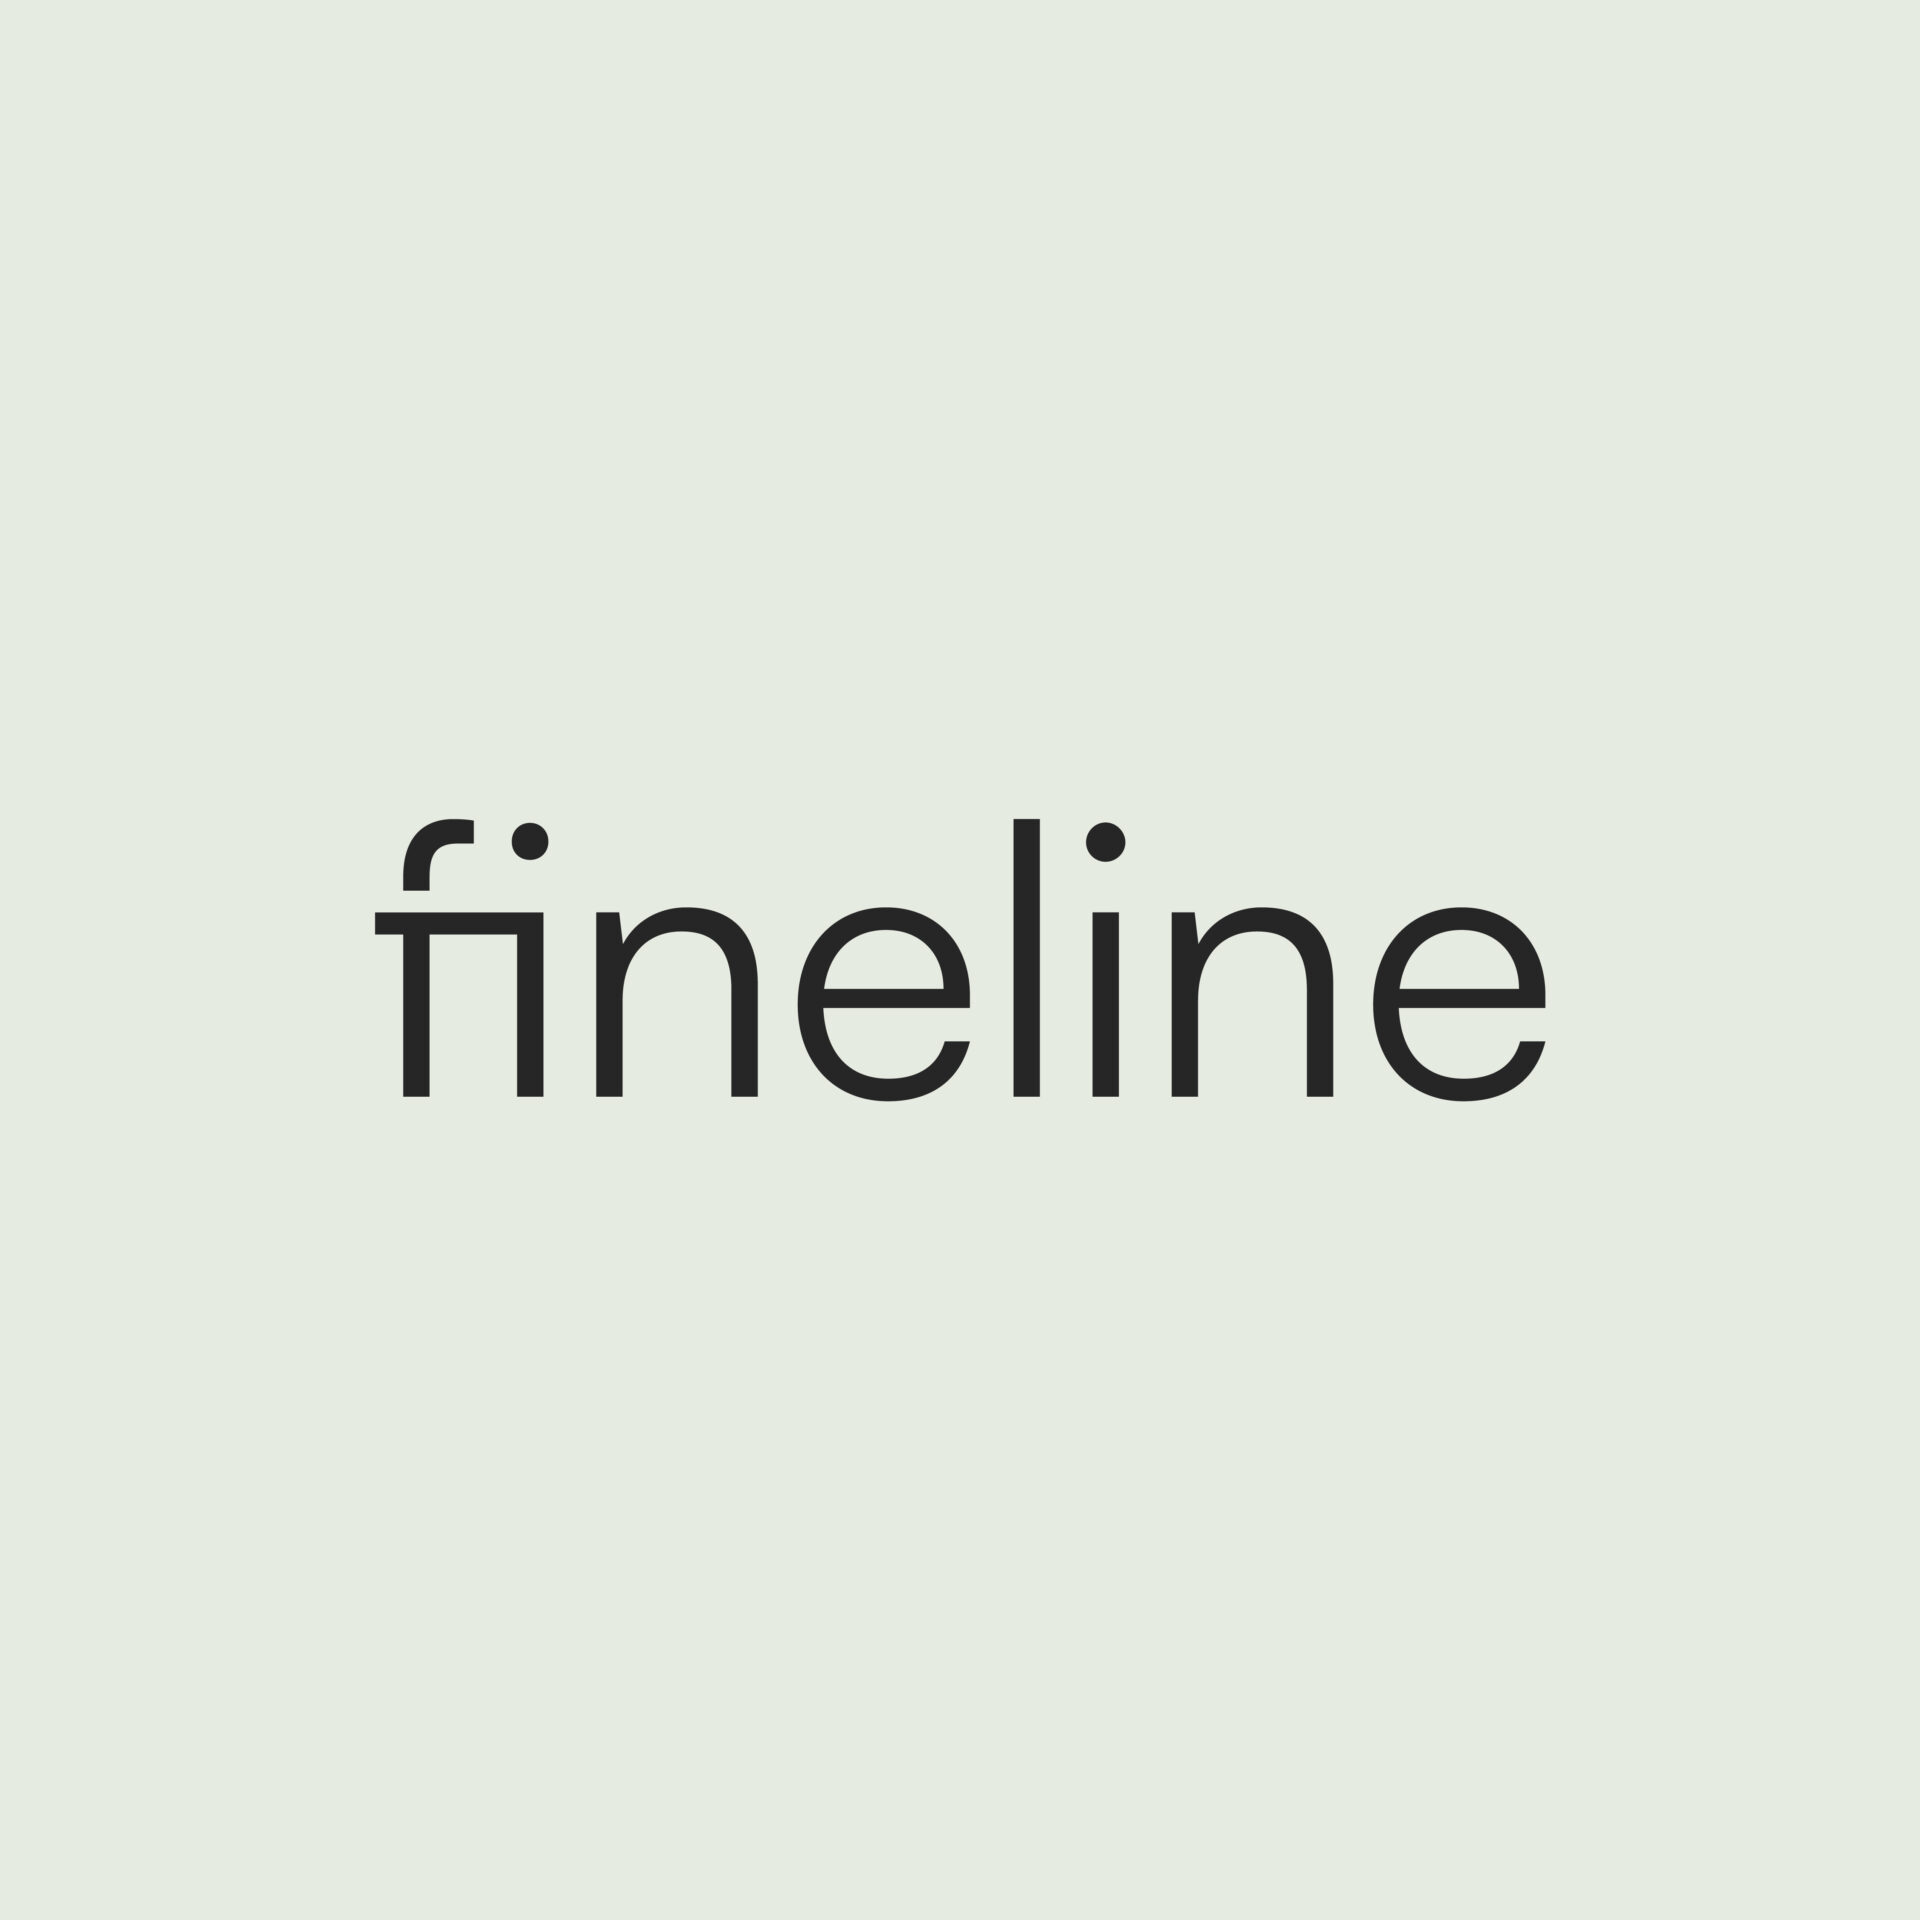 Fineline Architects